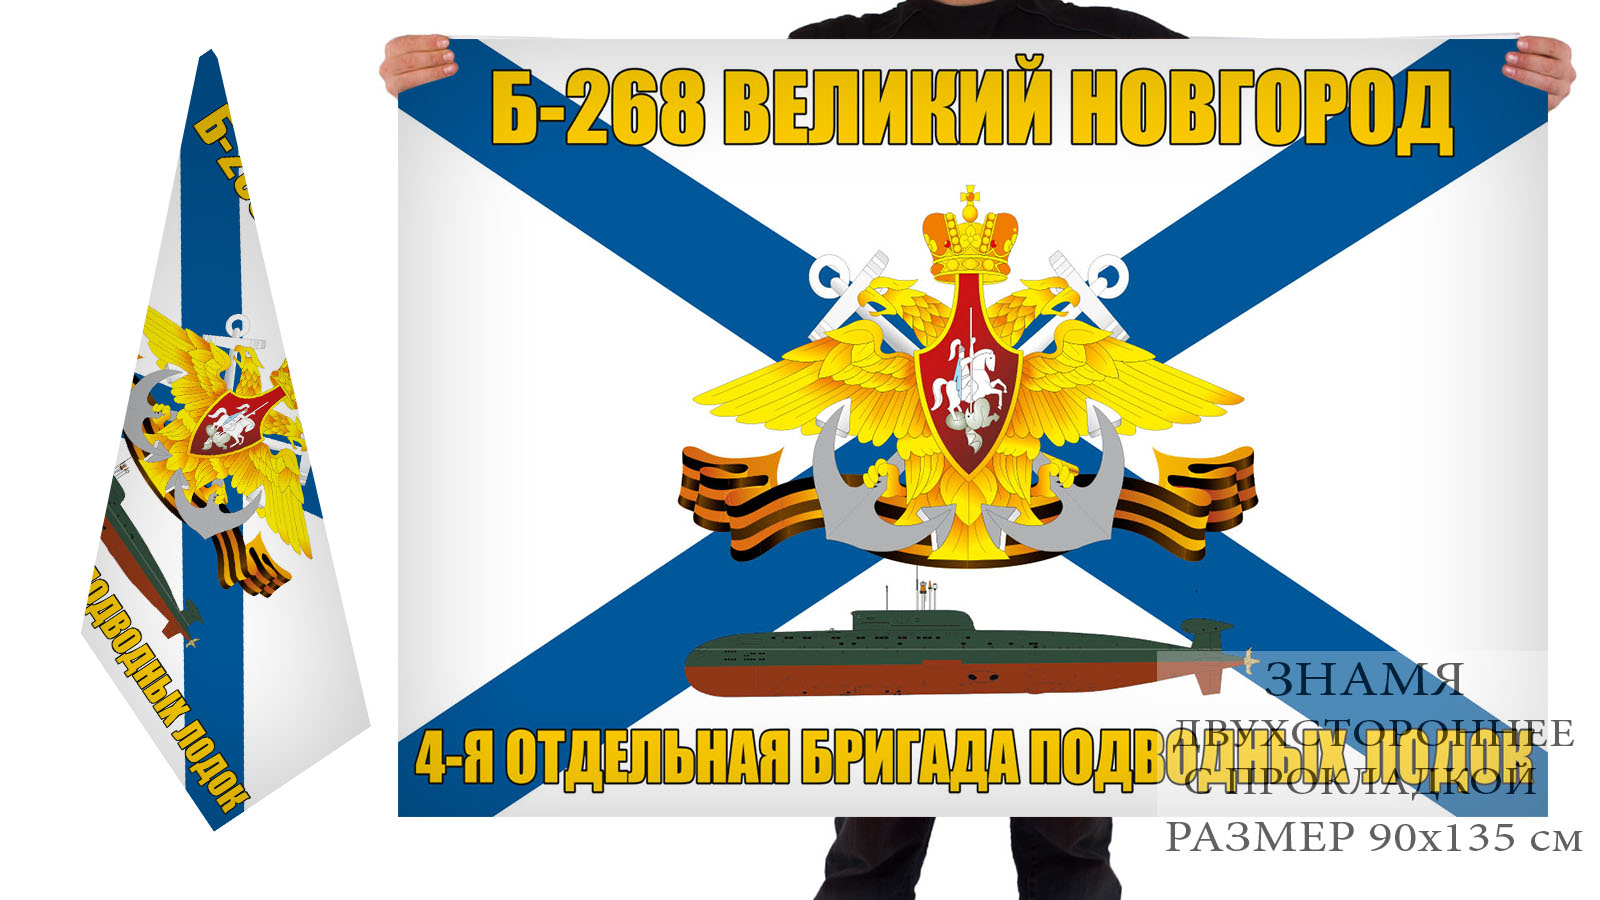 Двусторонний флаг подводная лодка Б-268 "Великий Новгород"